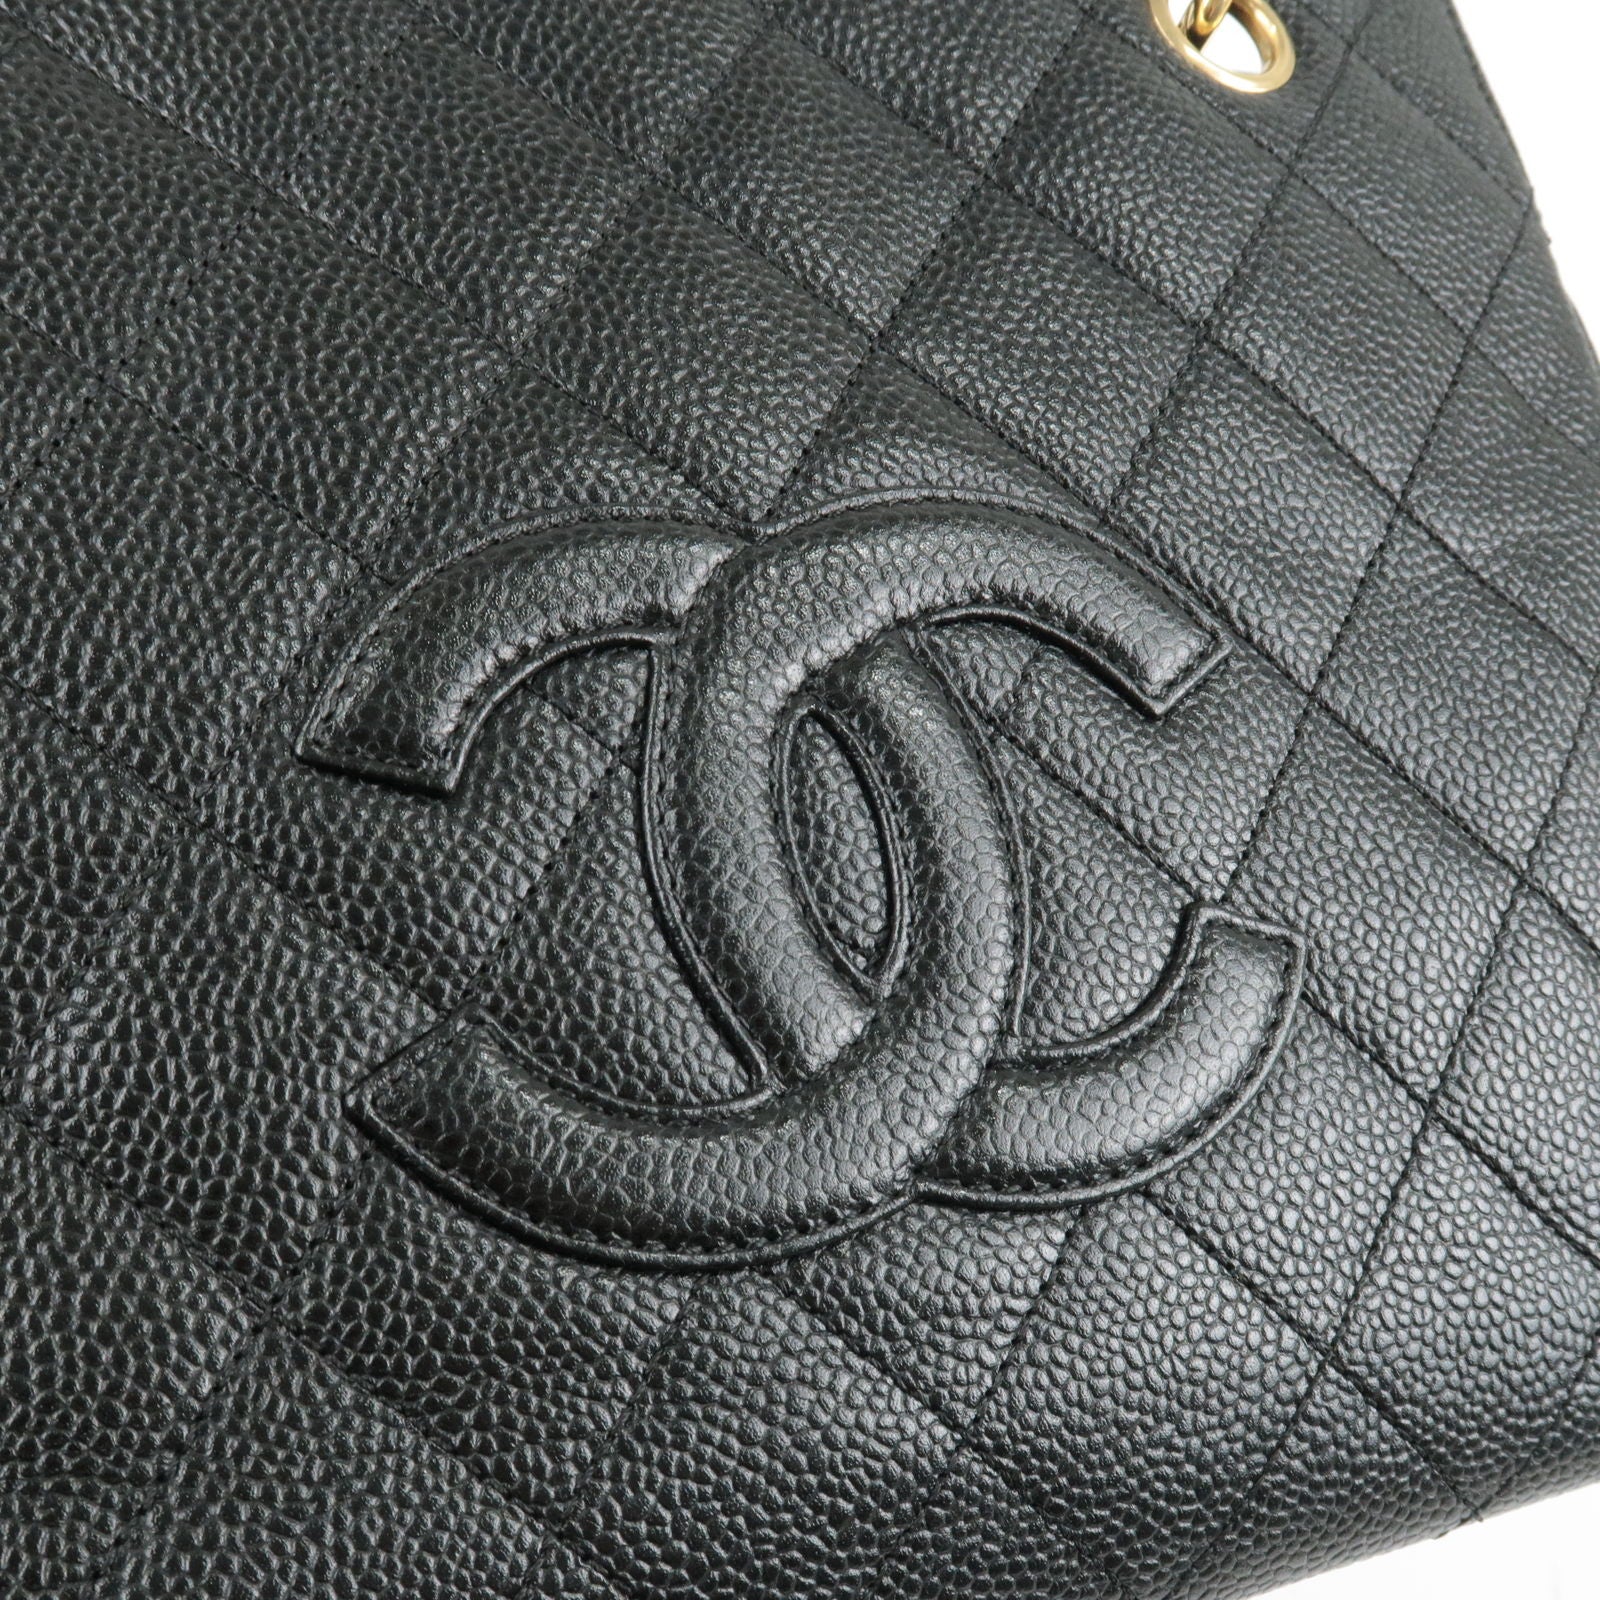 Chanel shoulder bag matelasse gold metal fittings lambskin used from japan